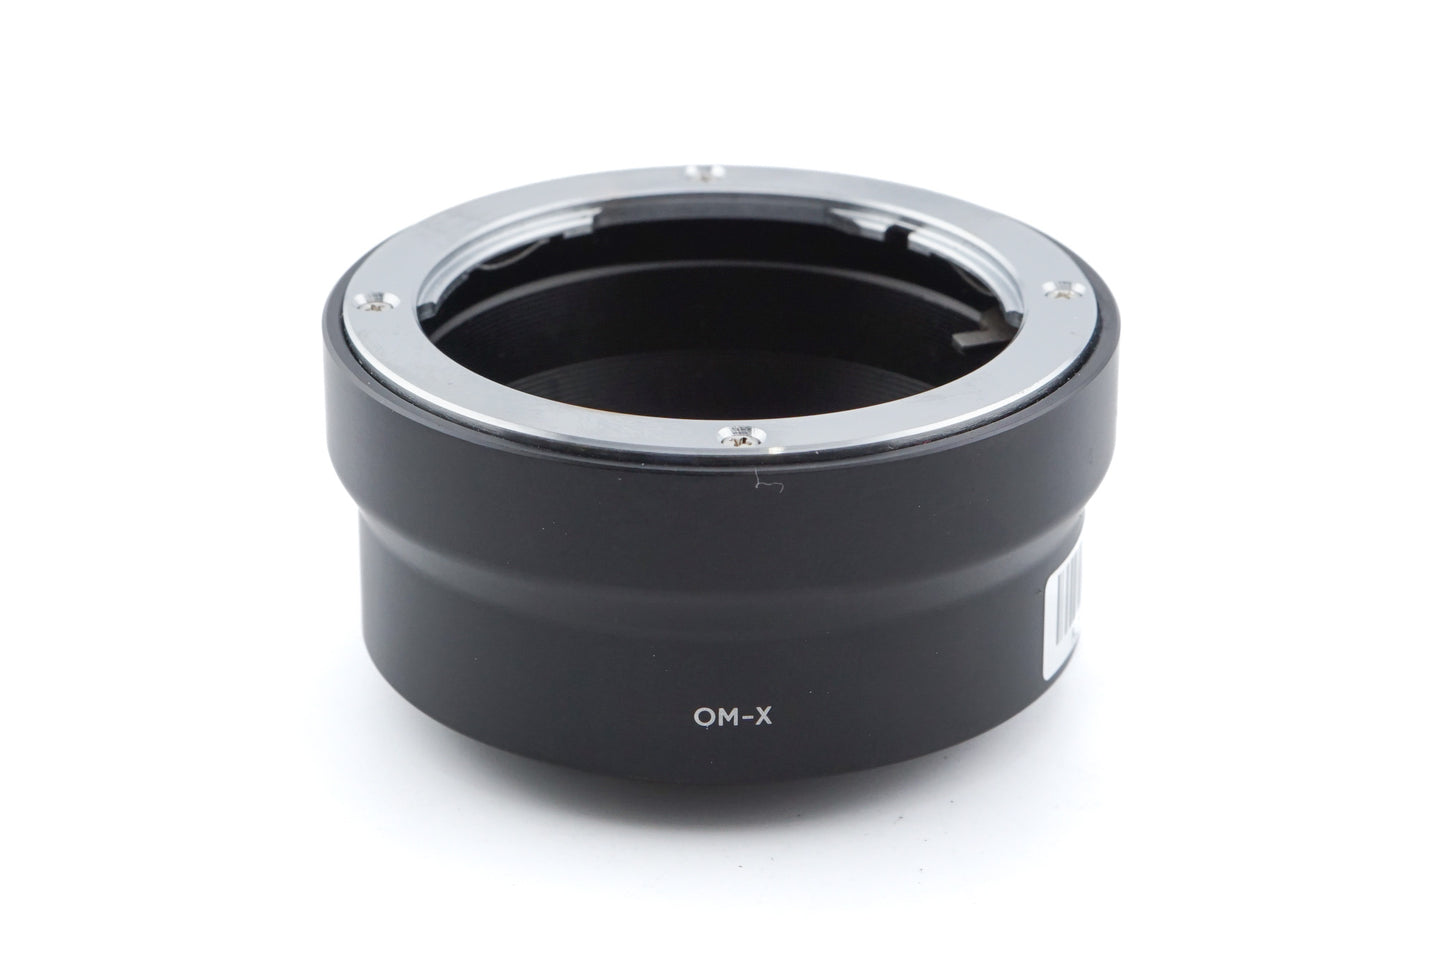 Urth Olympus OM - Fuji X (OM-X) Adapter - Lens Adapter